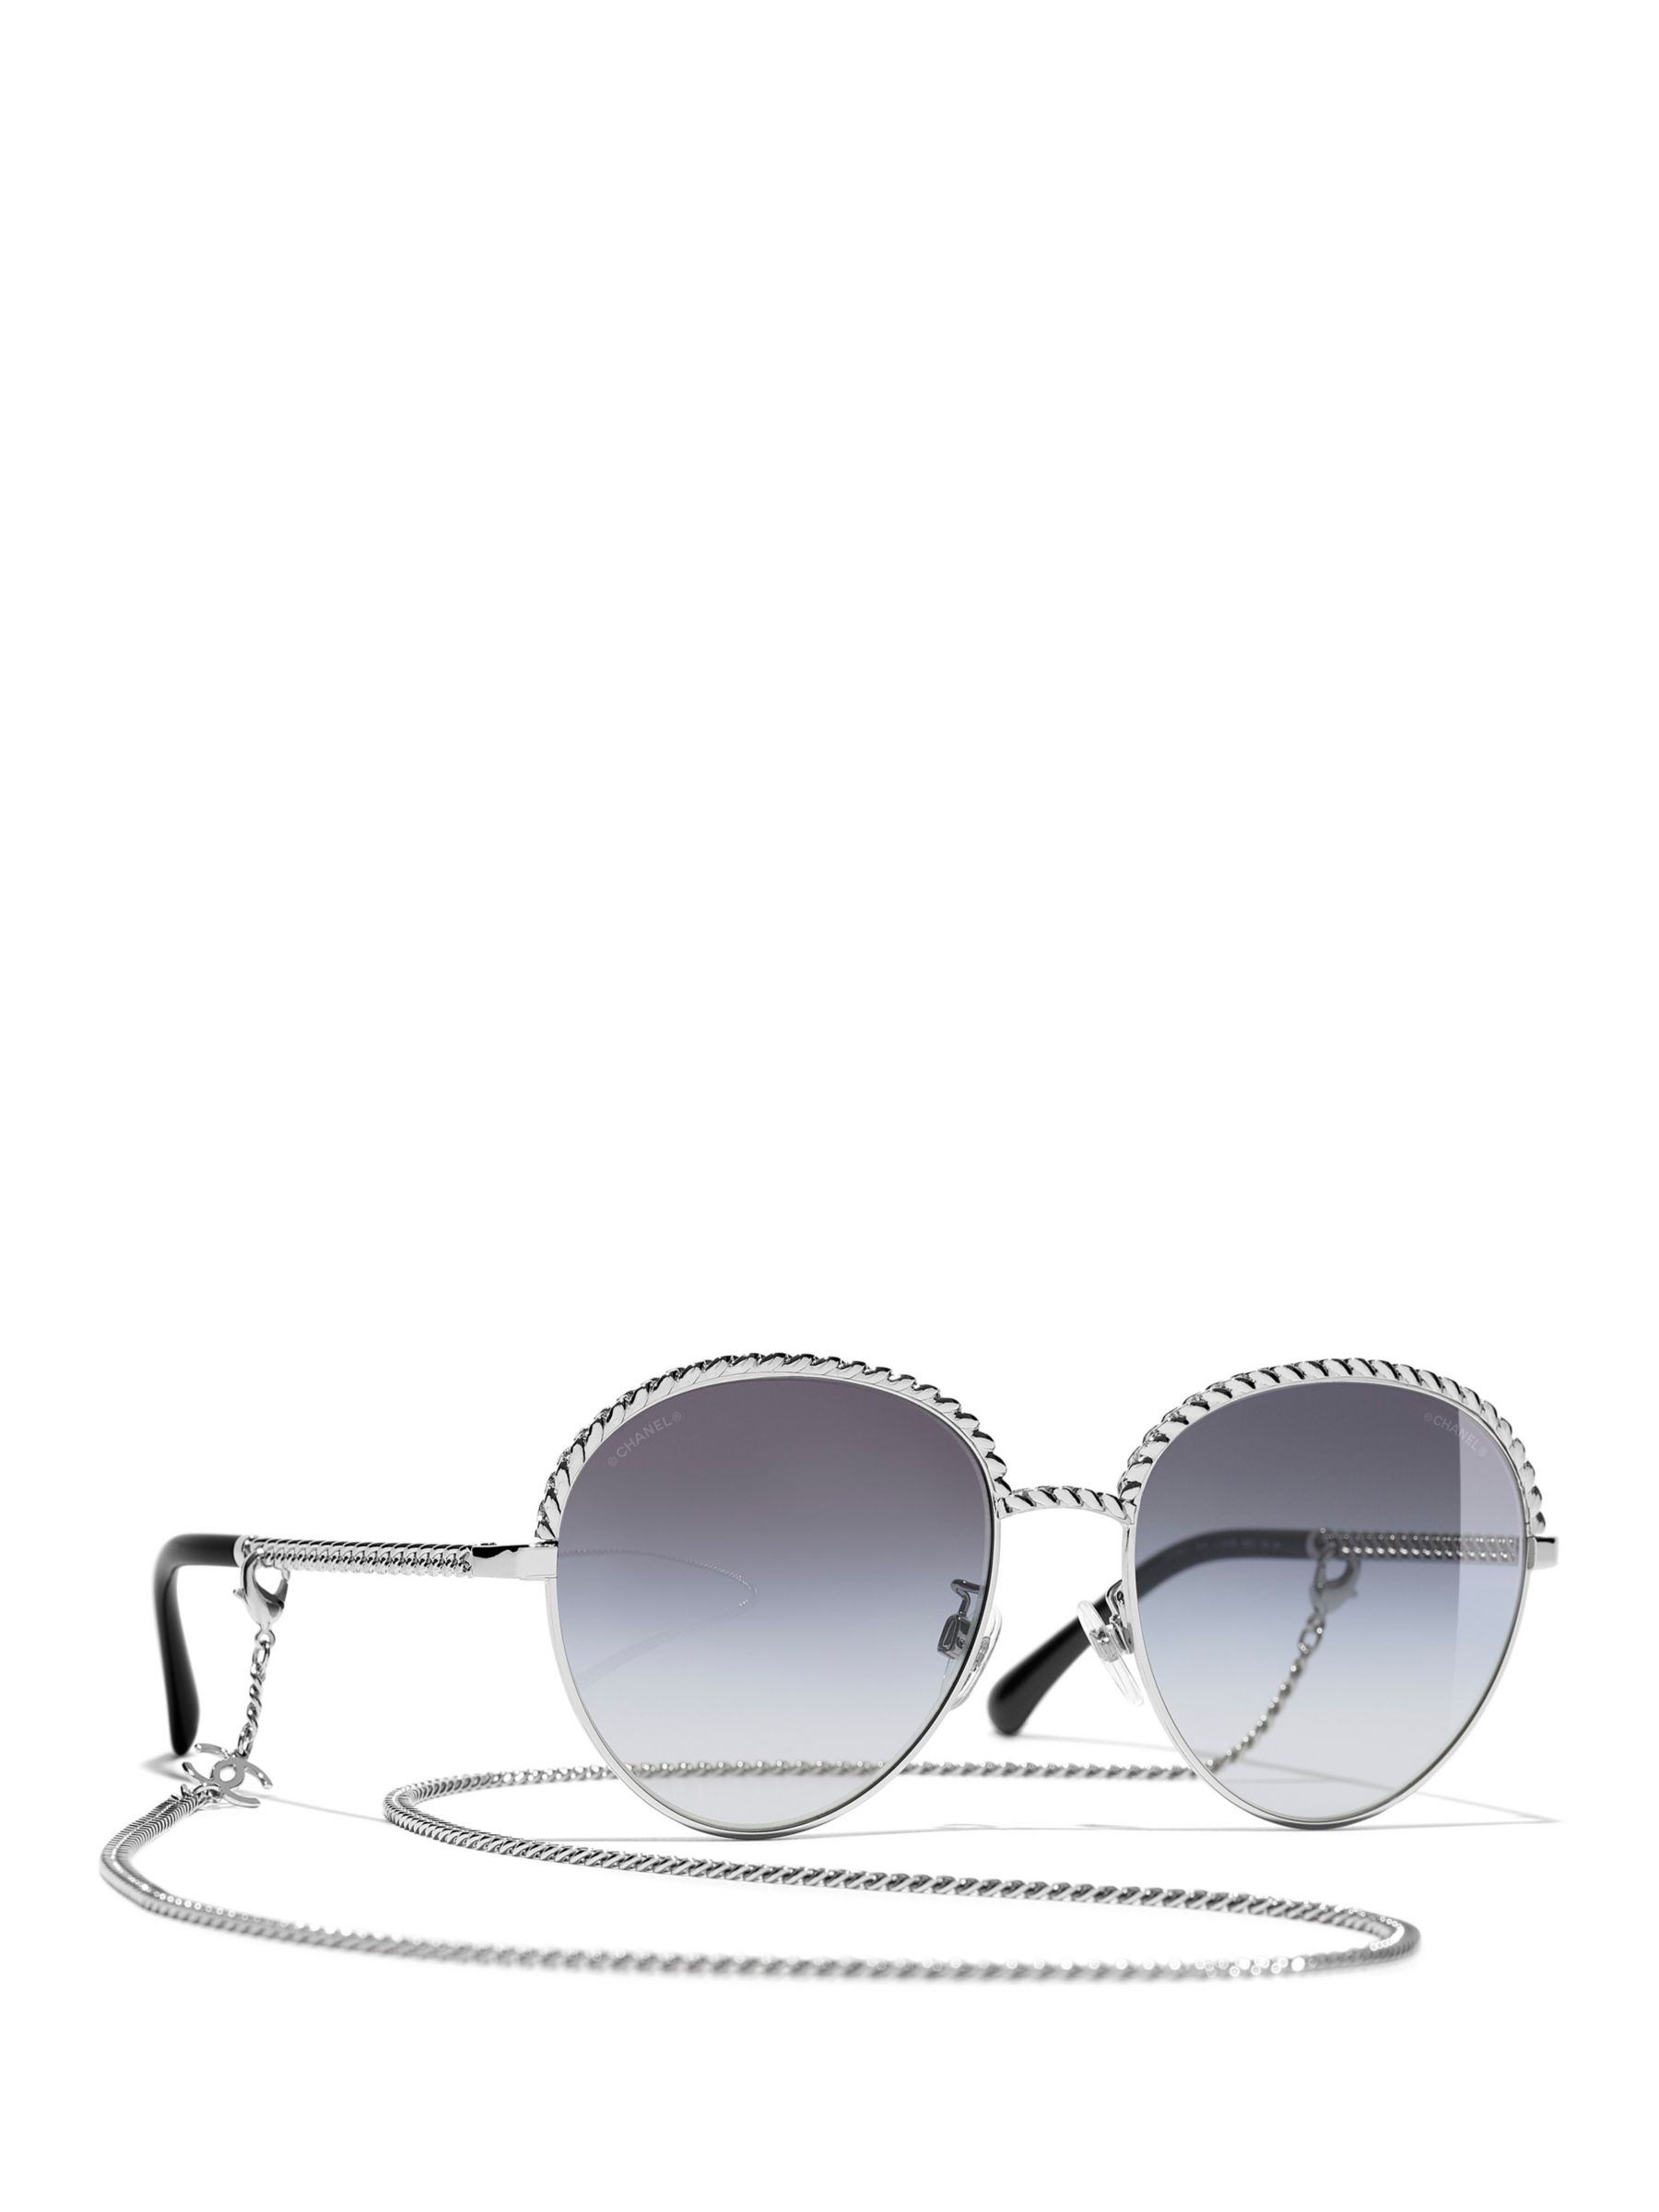 Burberrys of London Round Oval Vintage Sunglasses Rare 